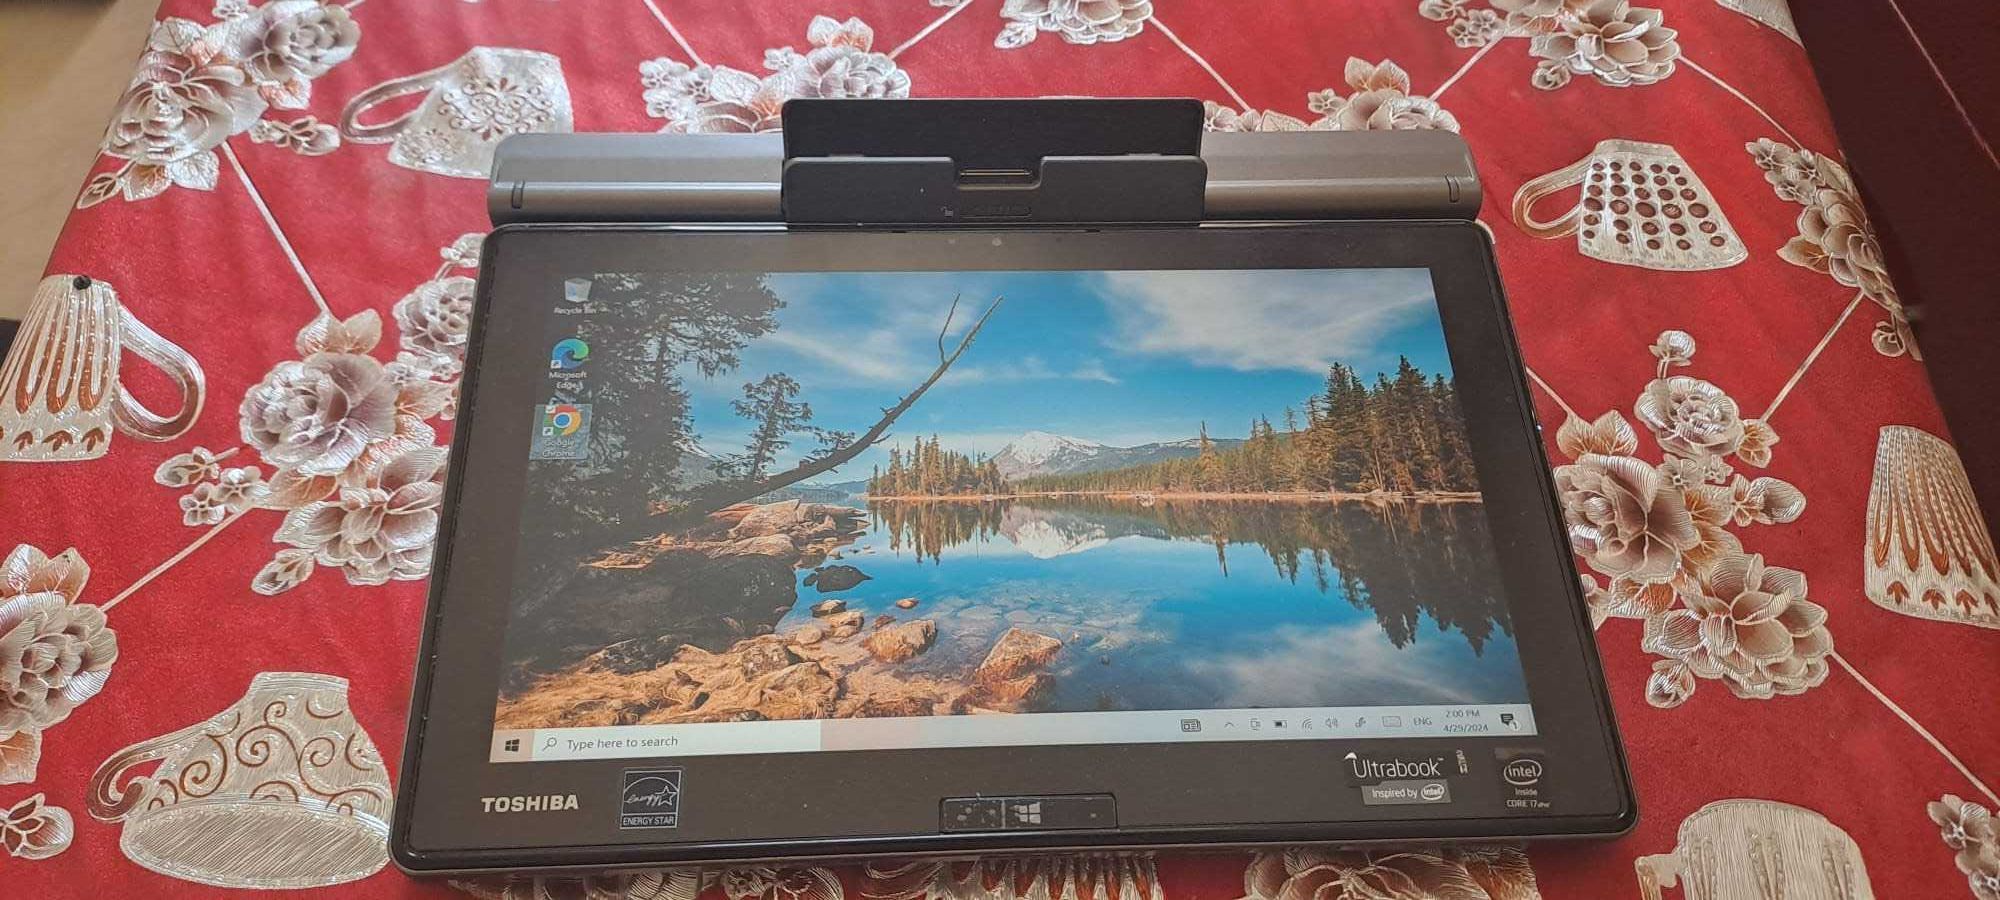 Tableta / Laptop Ultrabook  Toshiba : i7 / 8 gb ram / ssd